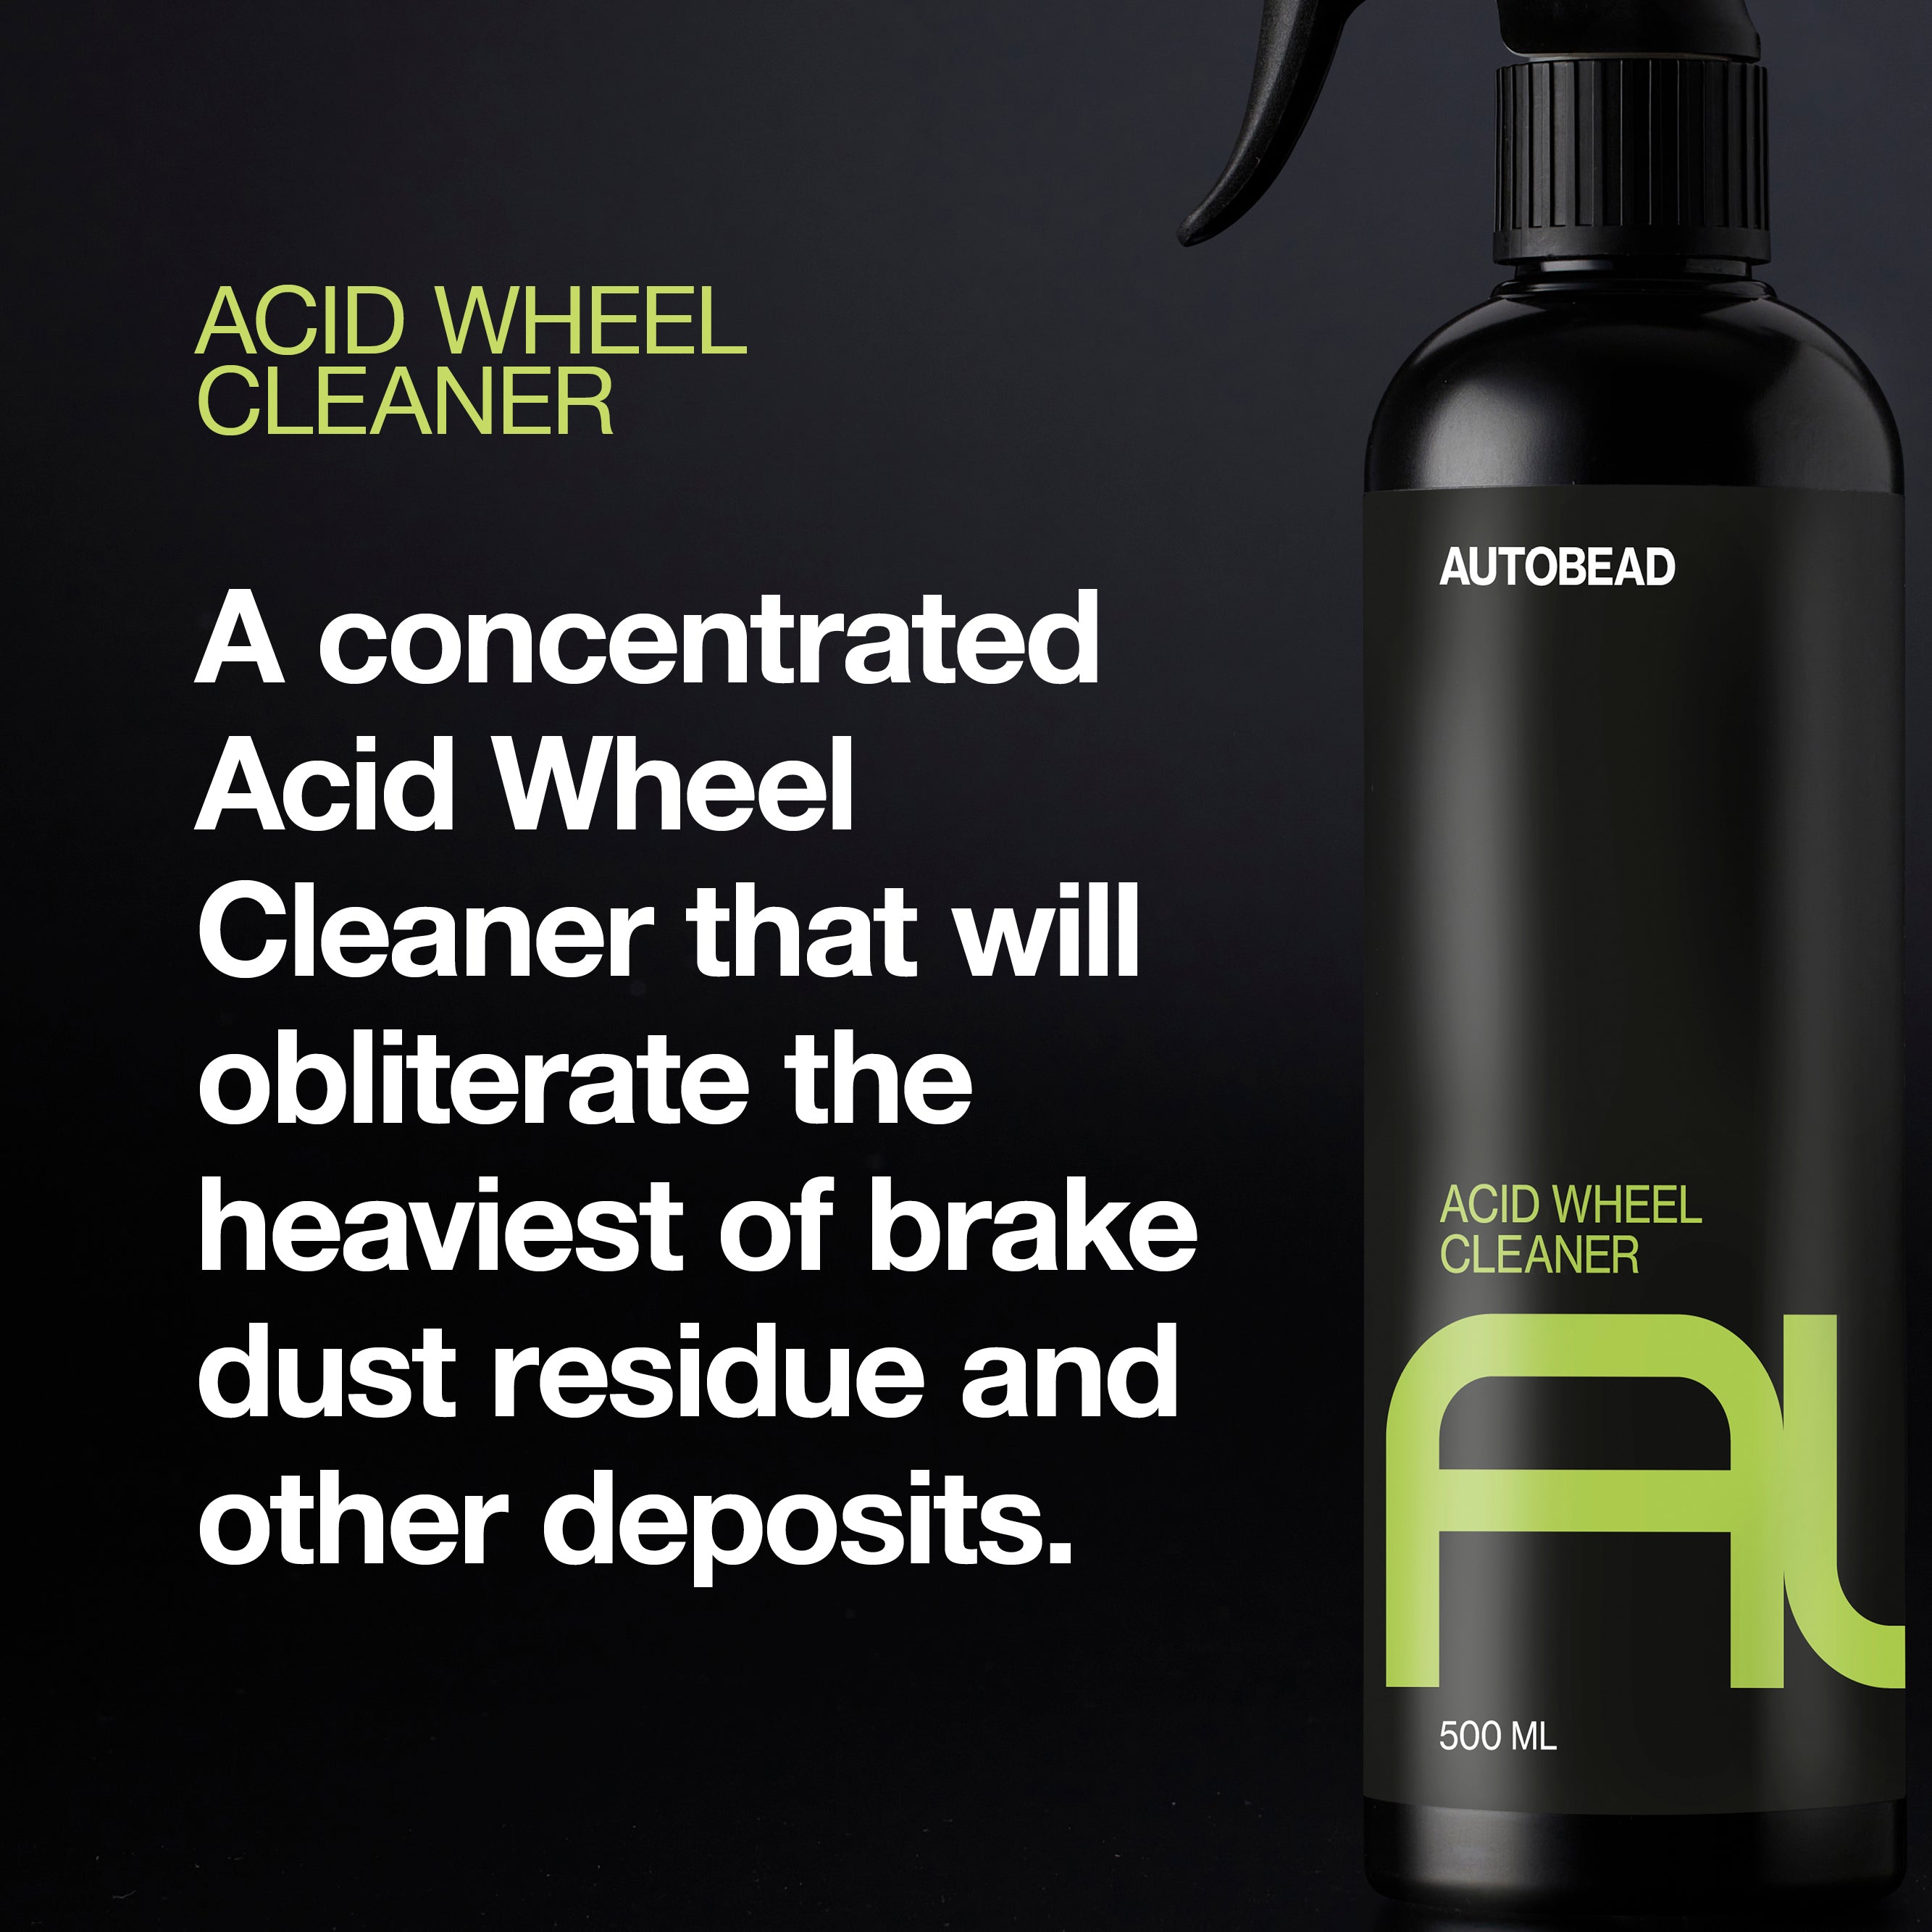 Acid Wheel Cleaner